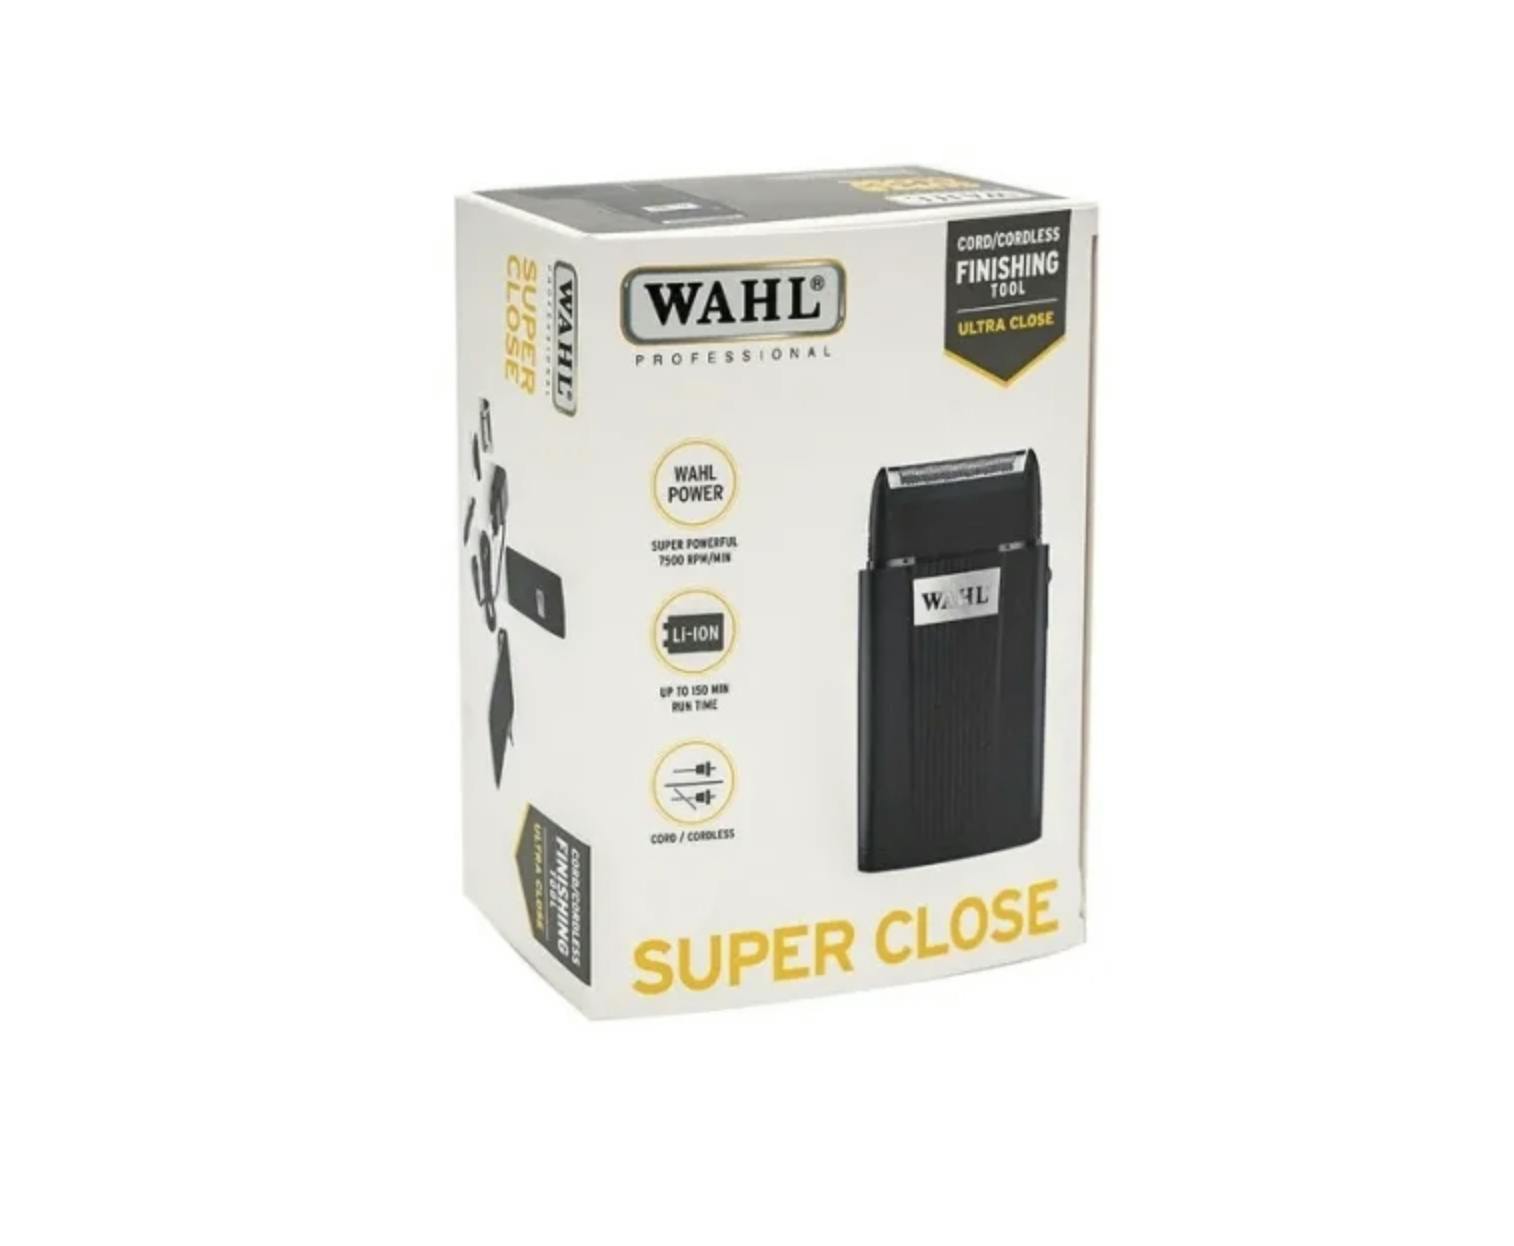 Rakapparat Wahl Mobili Wahl Pro Super Close, WAHP3616-0470 | WAHL